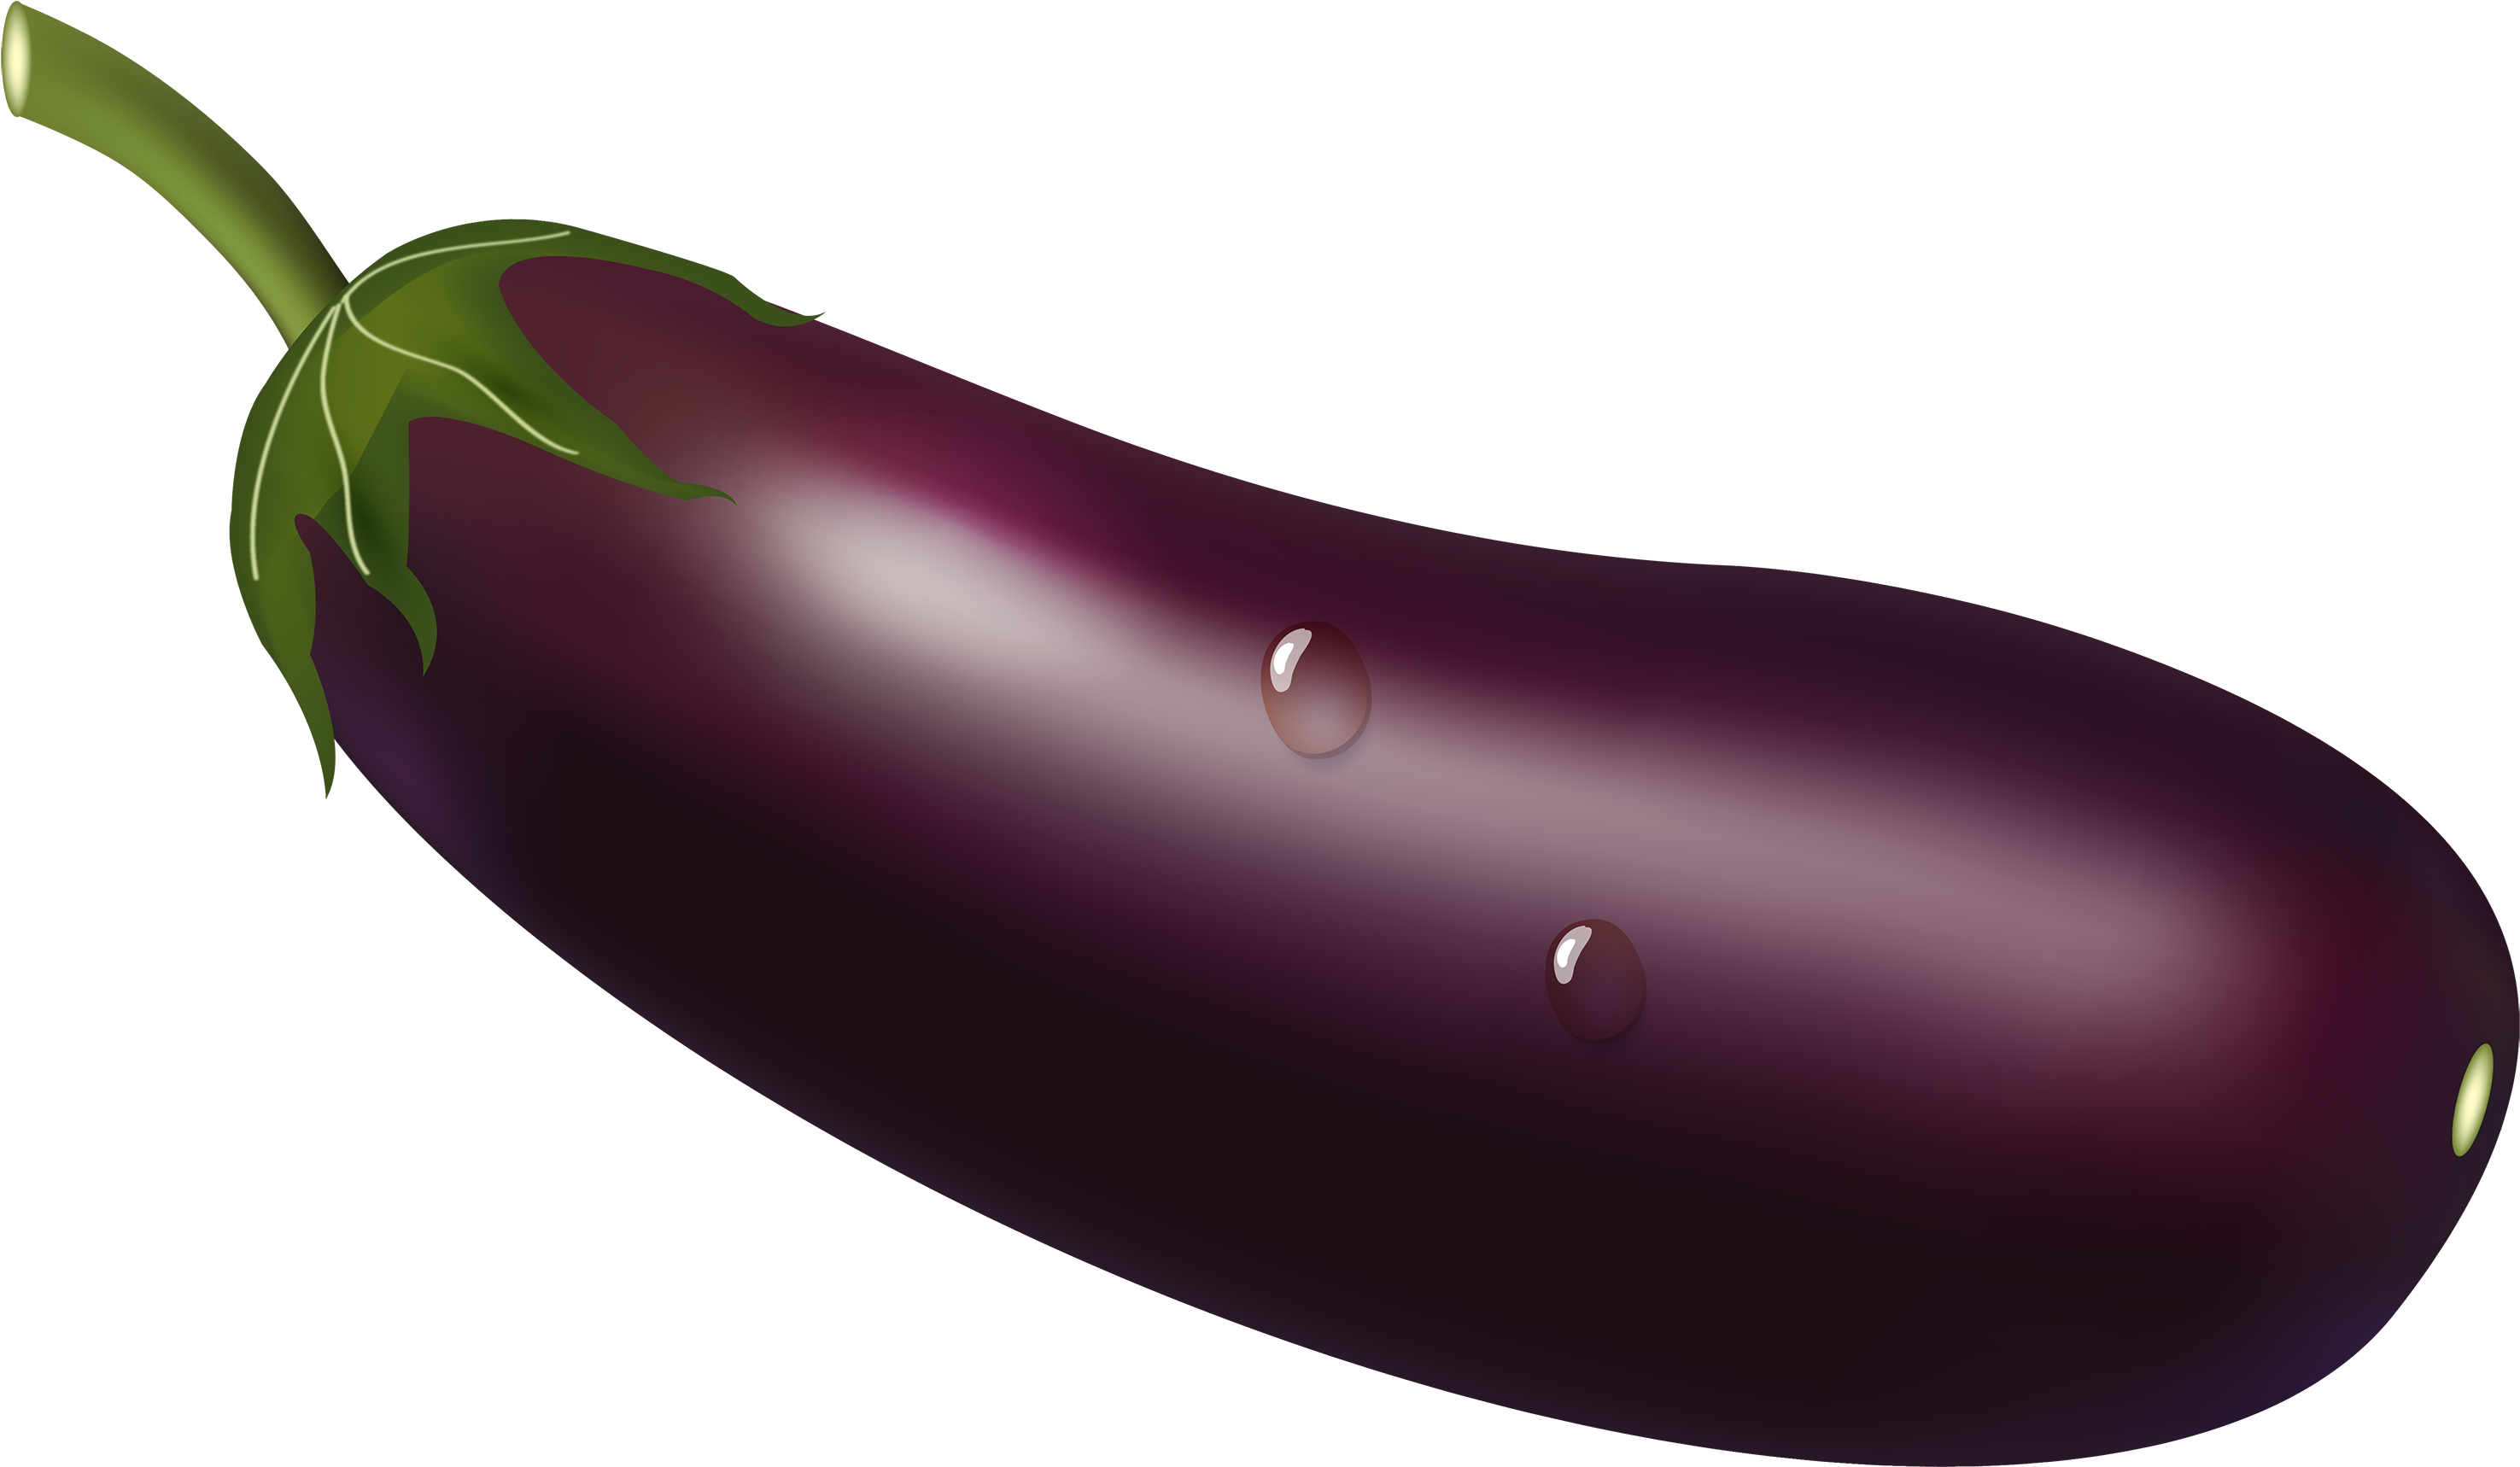 Eggplant Png Images Transparent Free Download